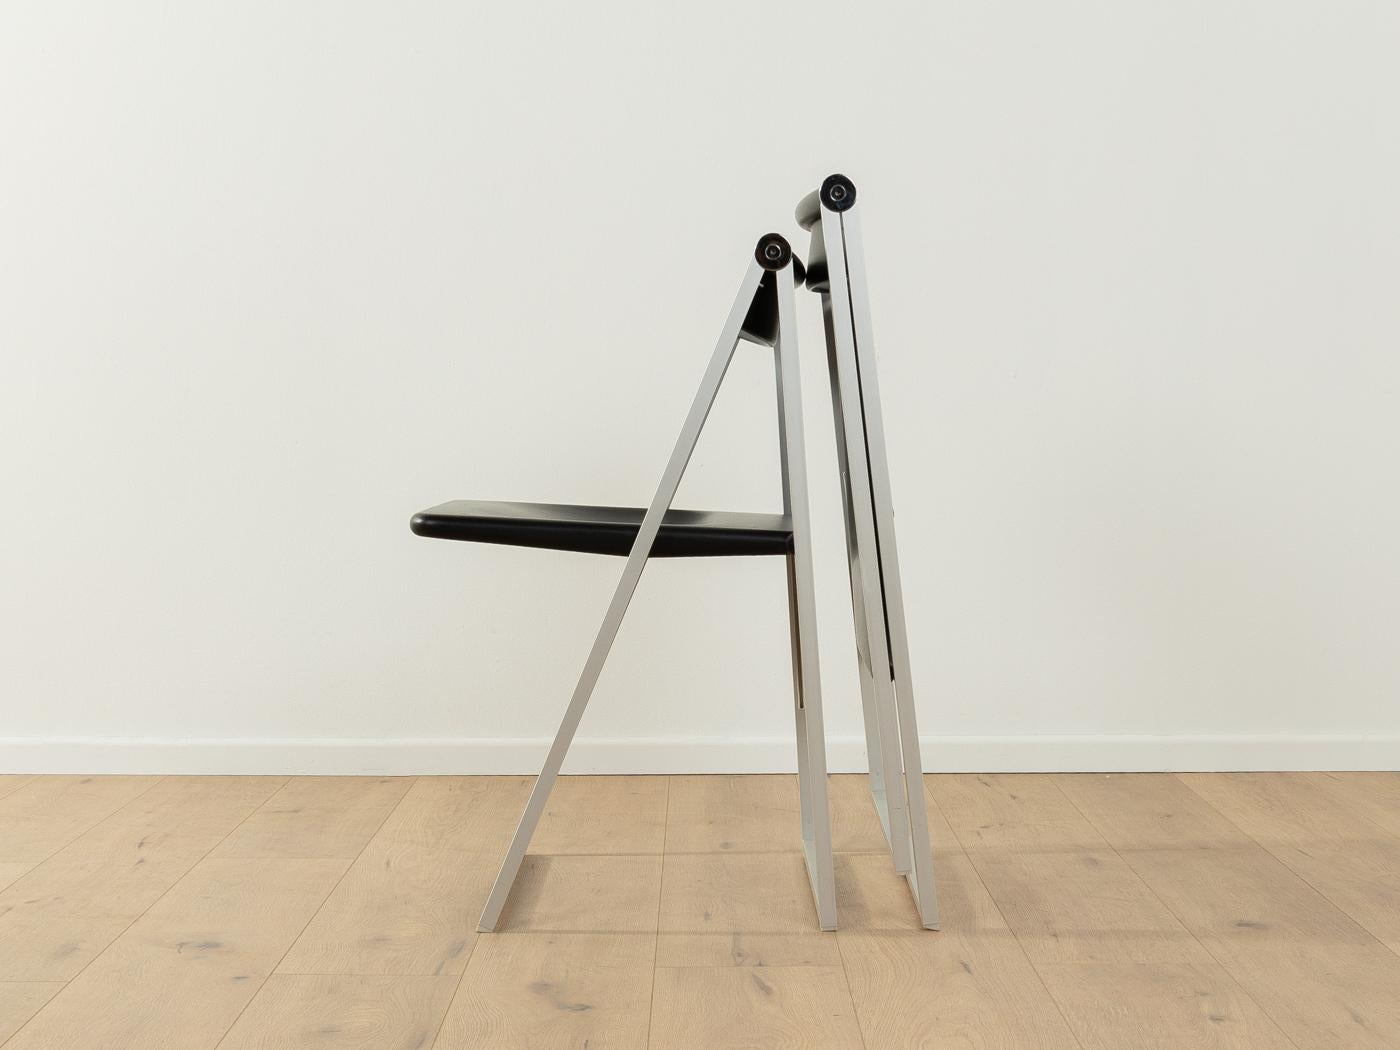 German 2x Team Form AG for interlübke folding chairs, Swiss Design